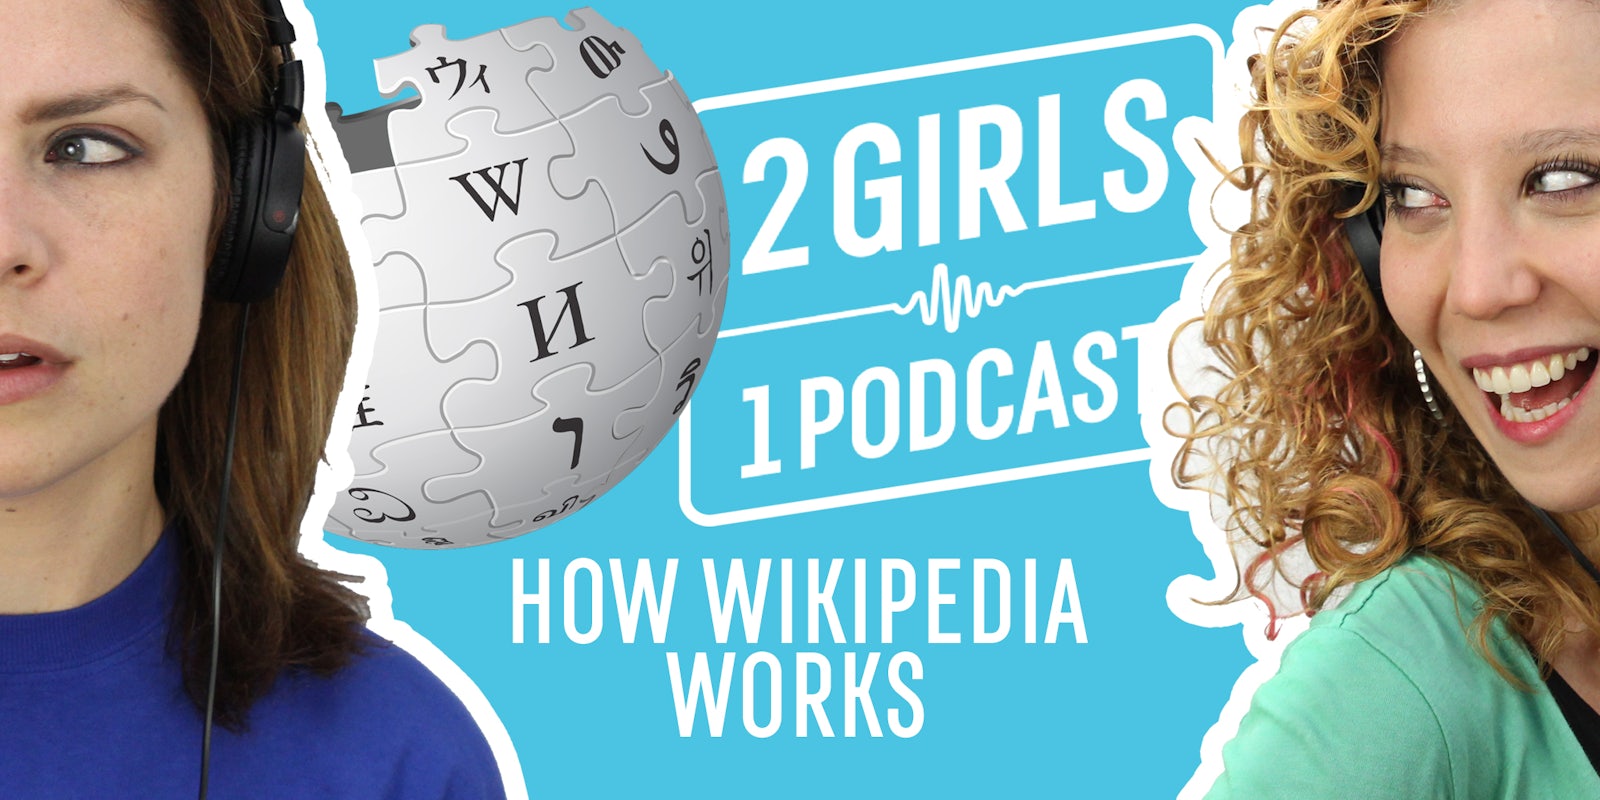 2 Girls 1 Podcast WIKIPEDIA